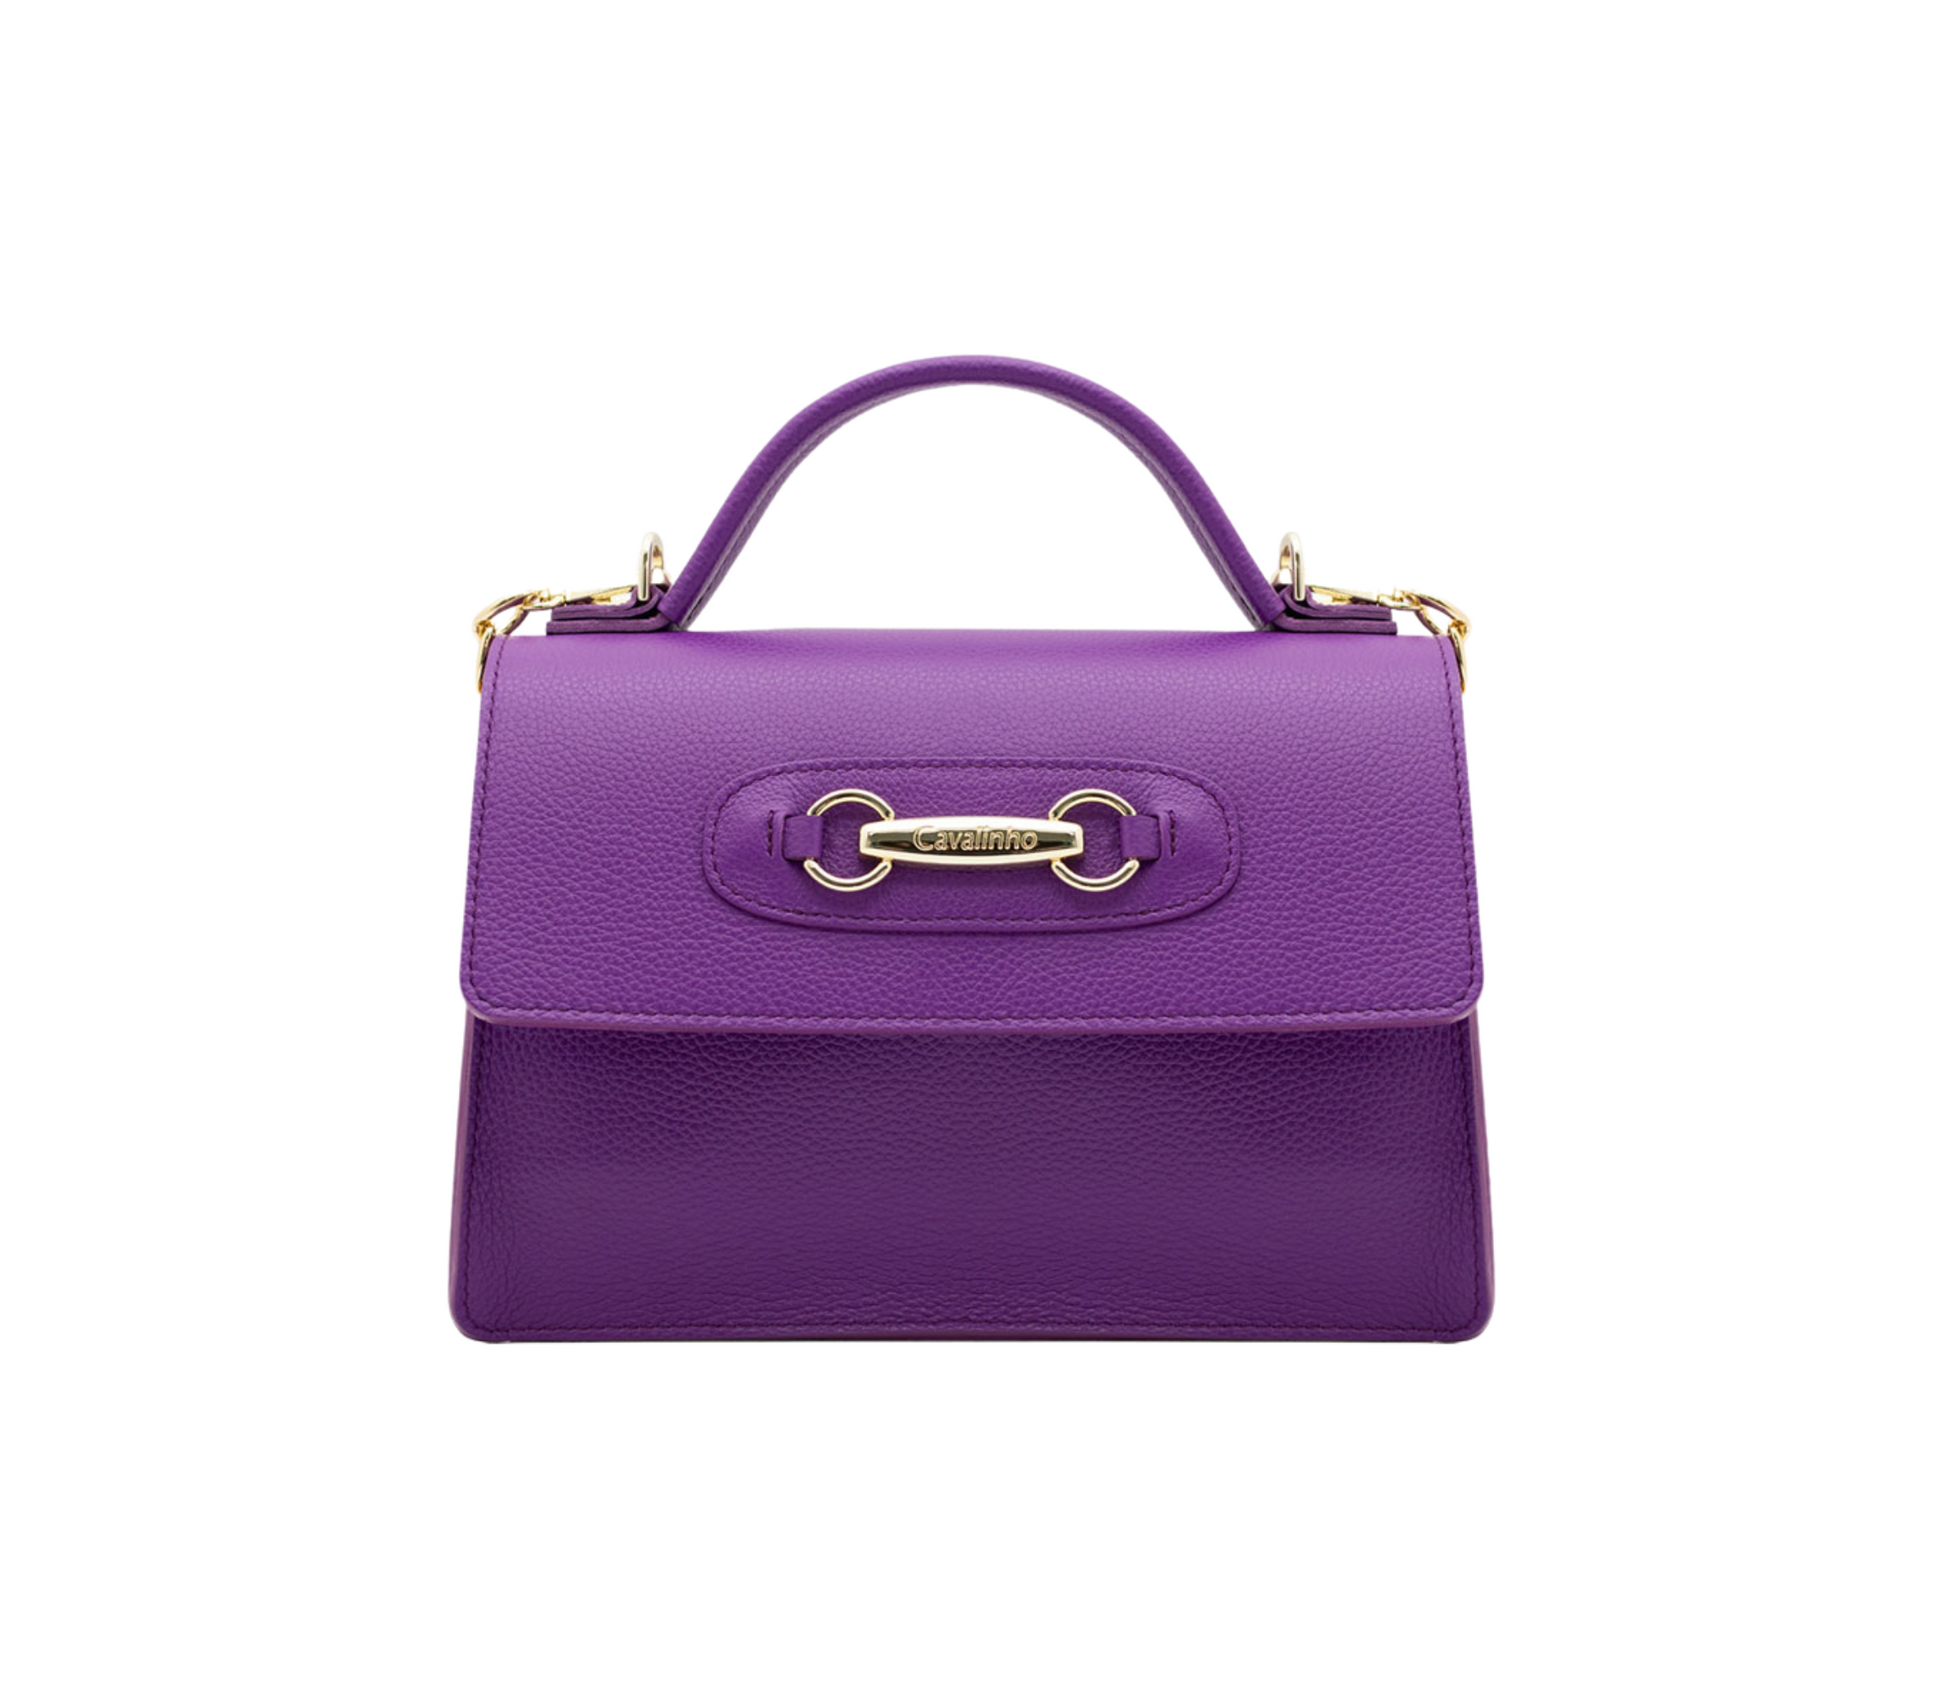 Cavalinho Muse Leather Handbag - Purple - 18300517.40_P01